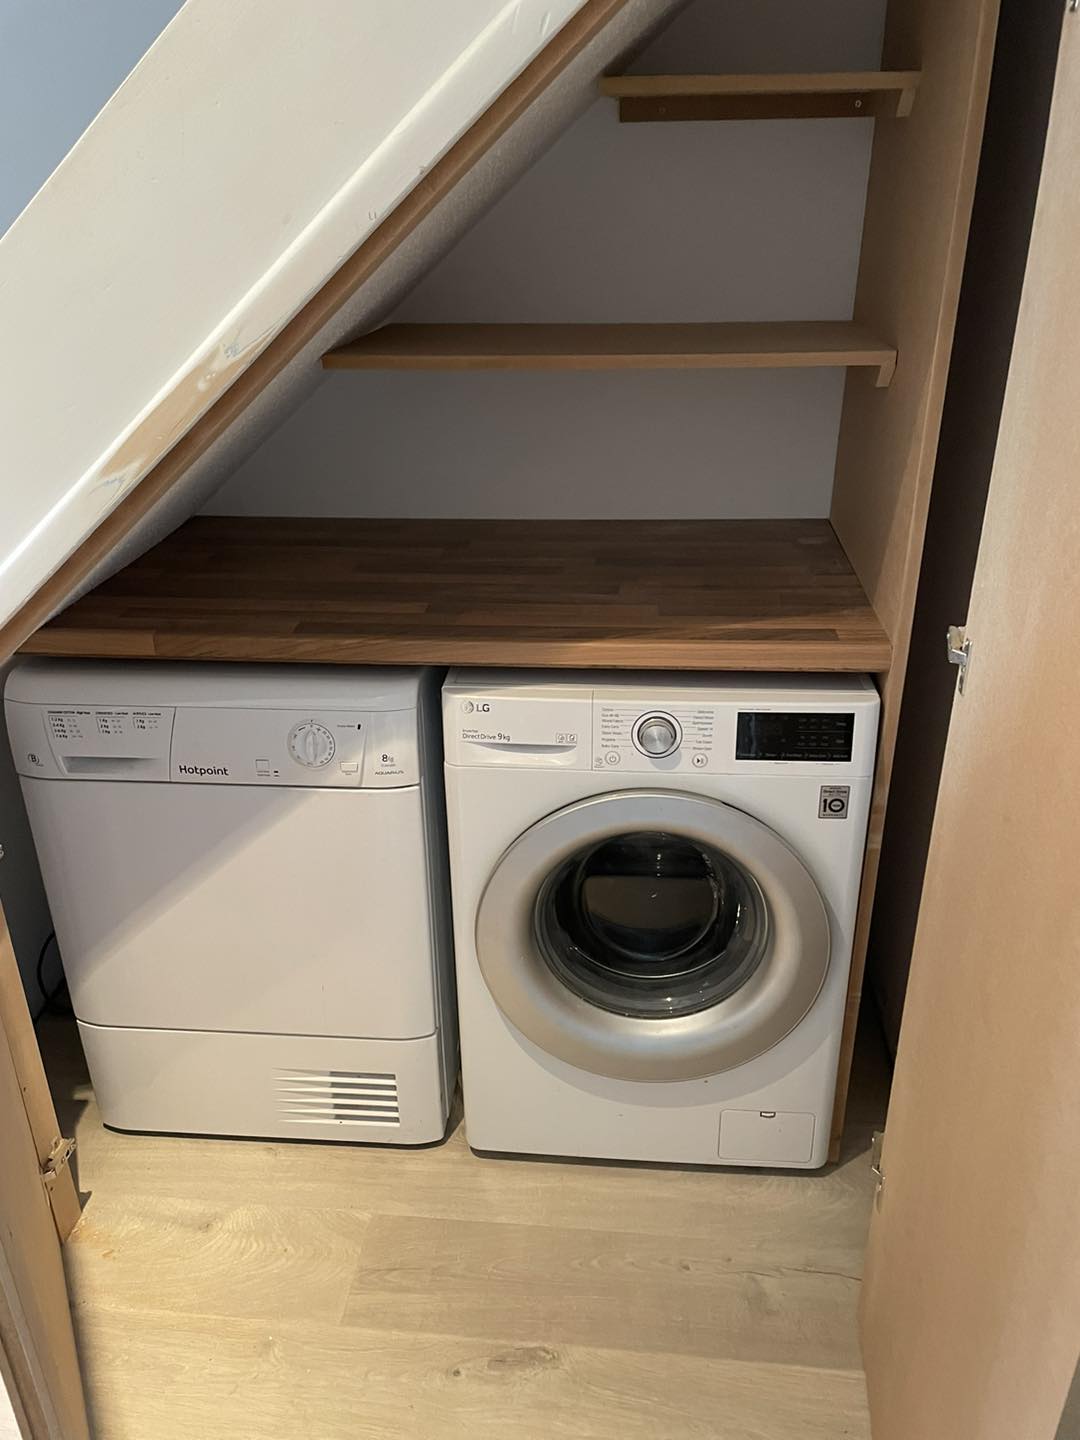 Tumble dryer and washing machine installed under stairs